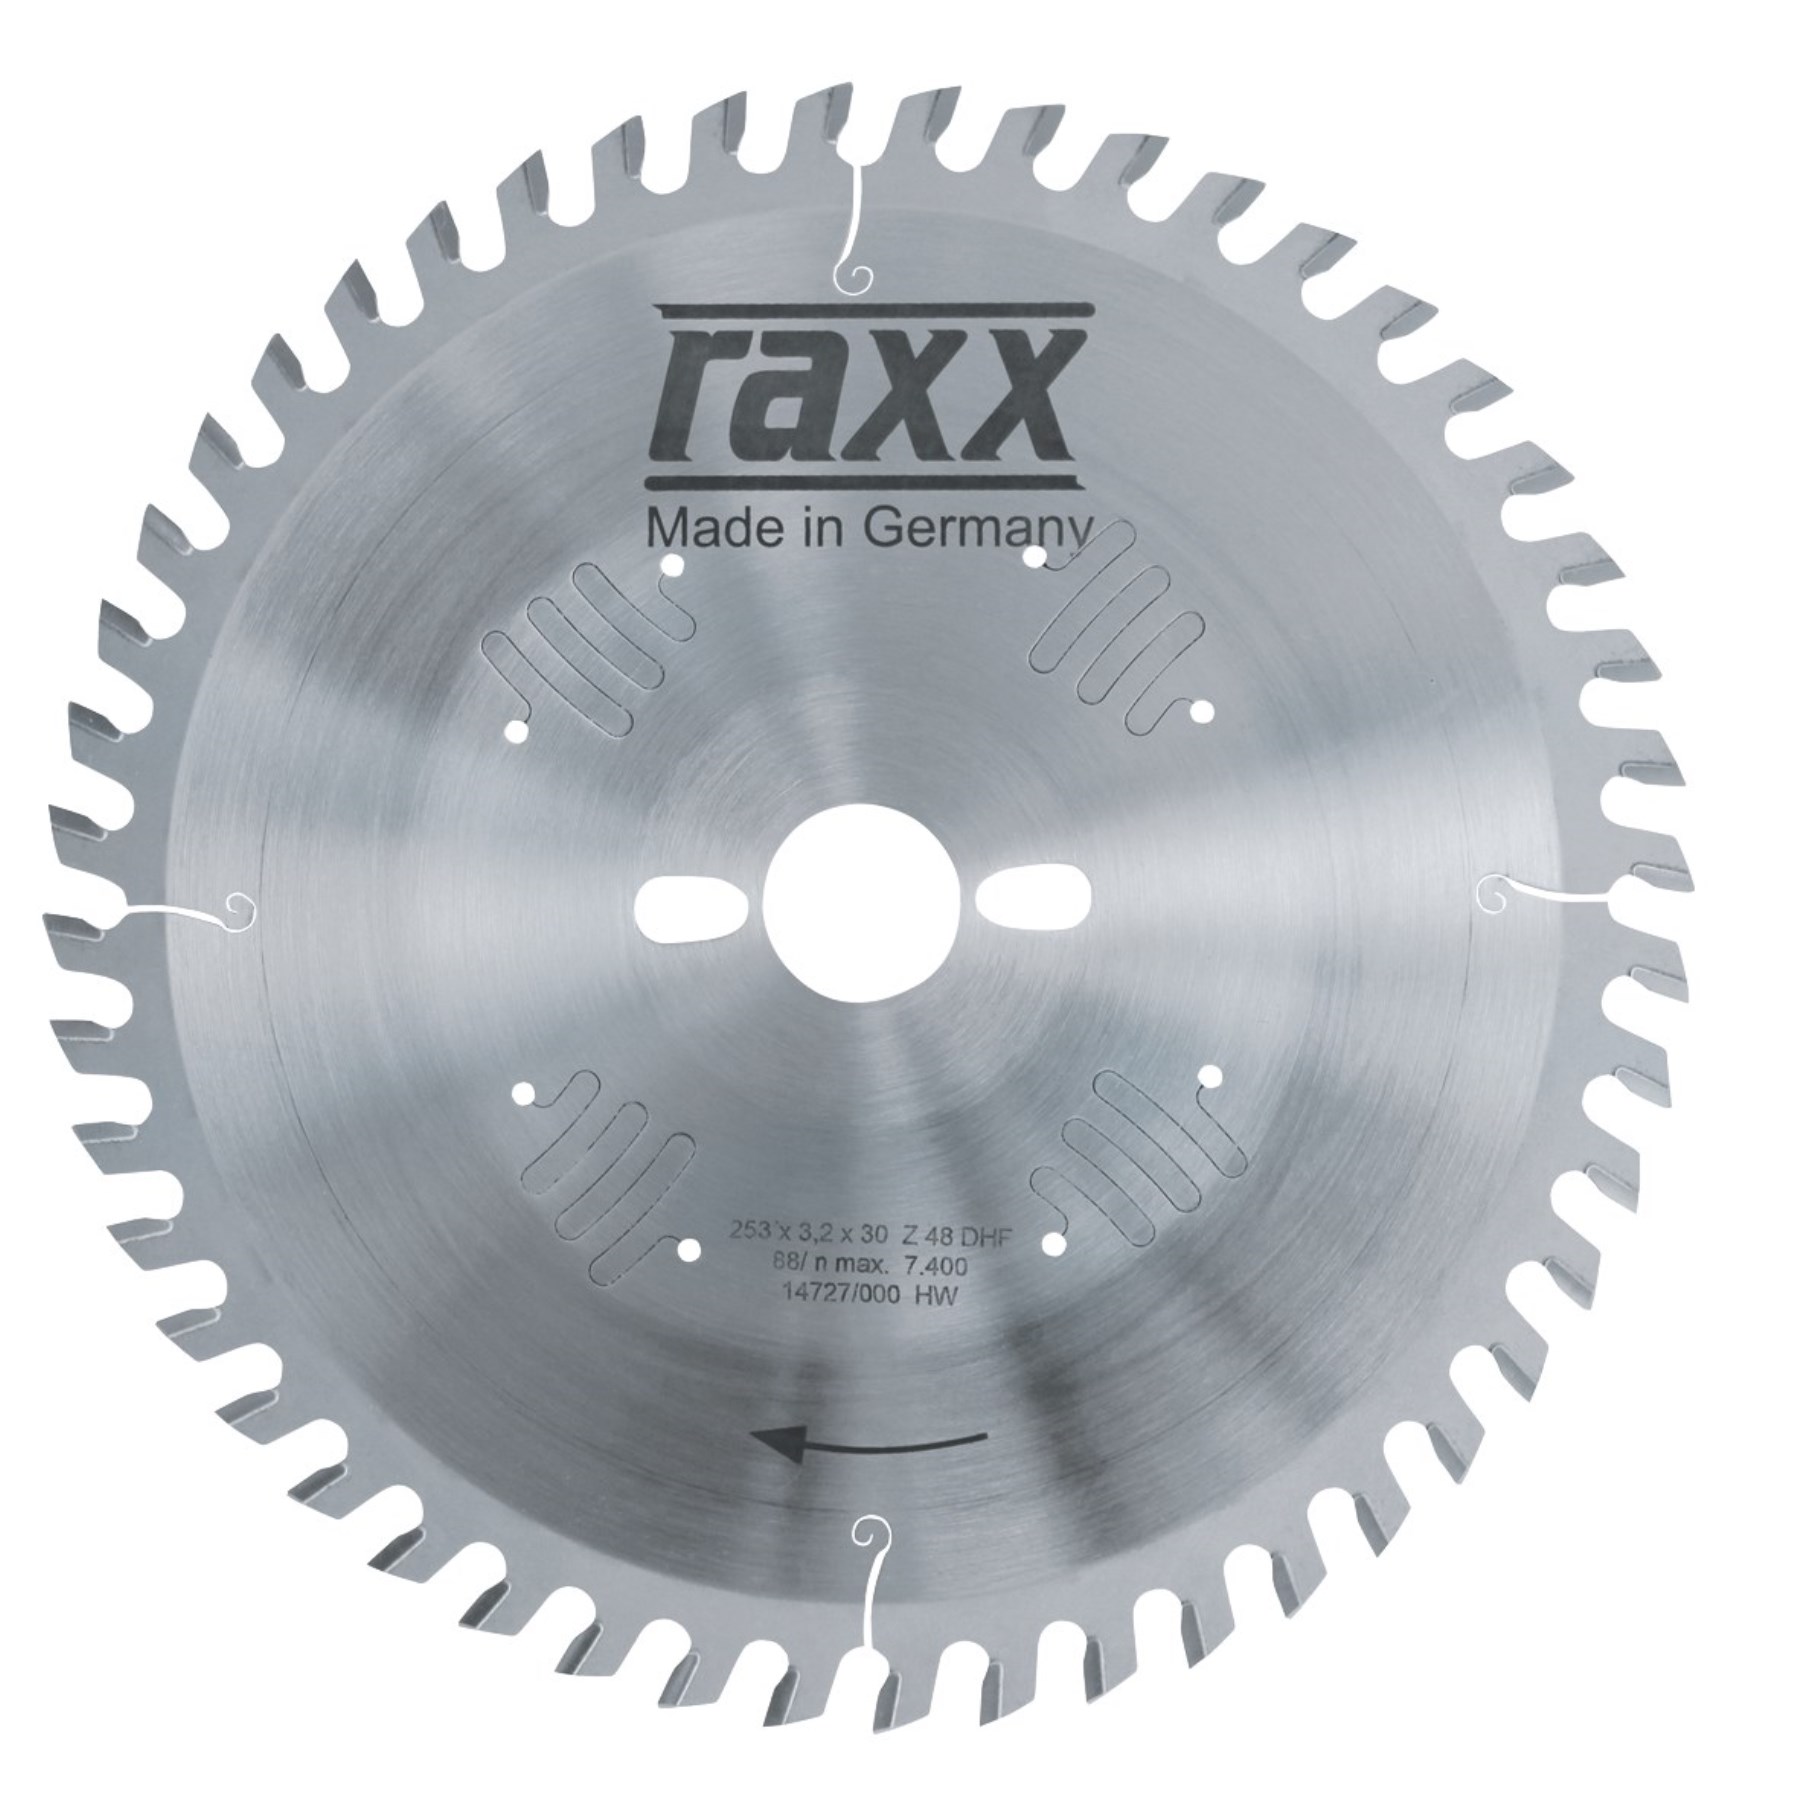 RAXX 1205047 kotouč k okružní pile HM 253x3,2x30 [ 63253300480060400 ]